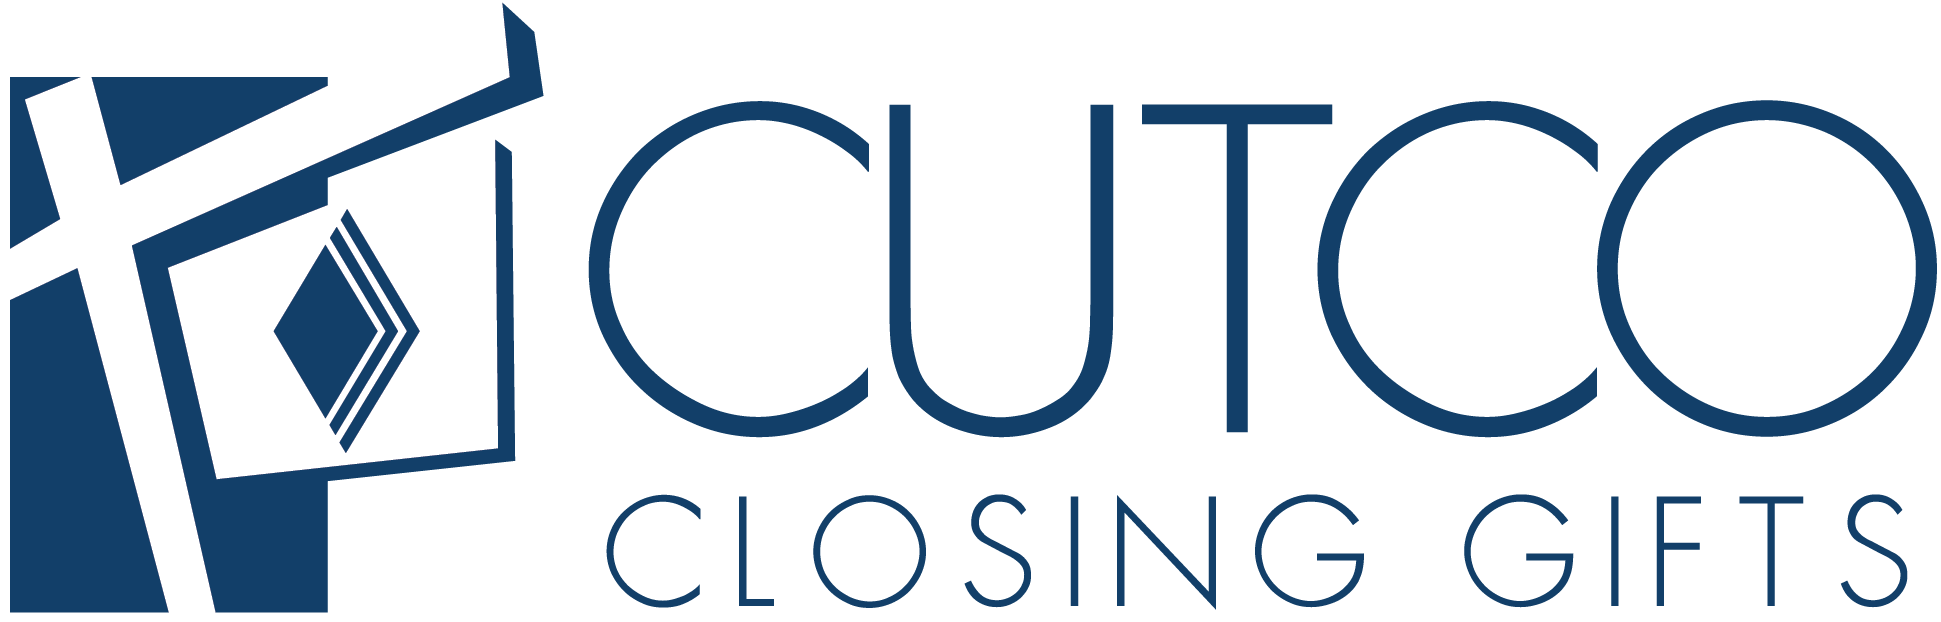 Cutco-closing-gifts